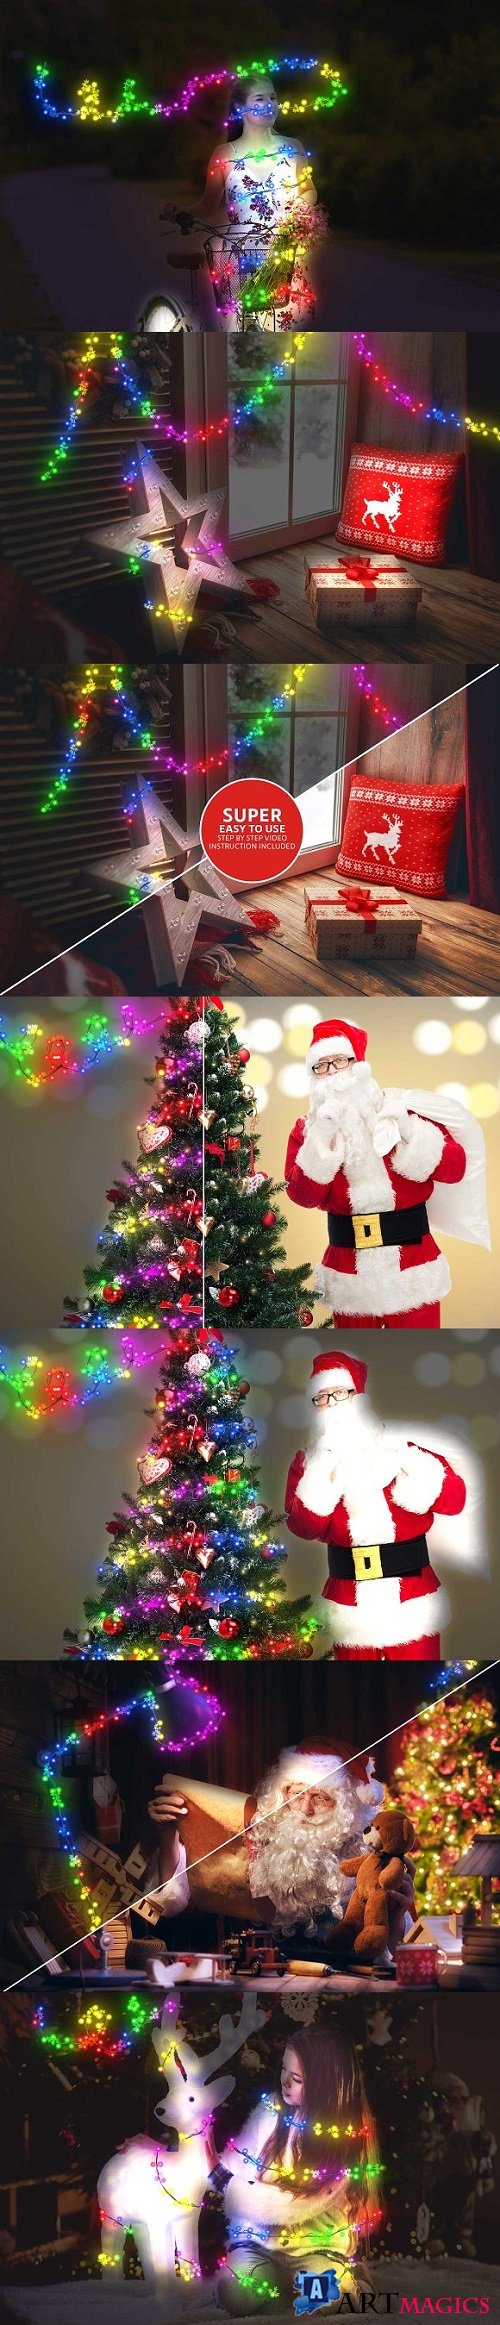 Christmas Lights Photoshop Action 2140451